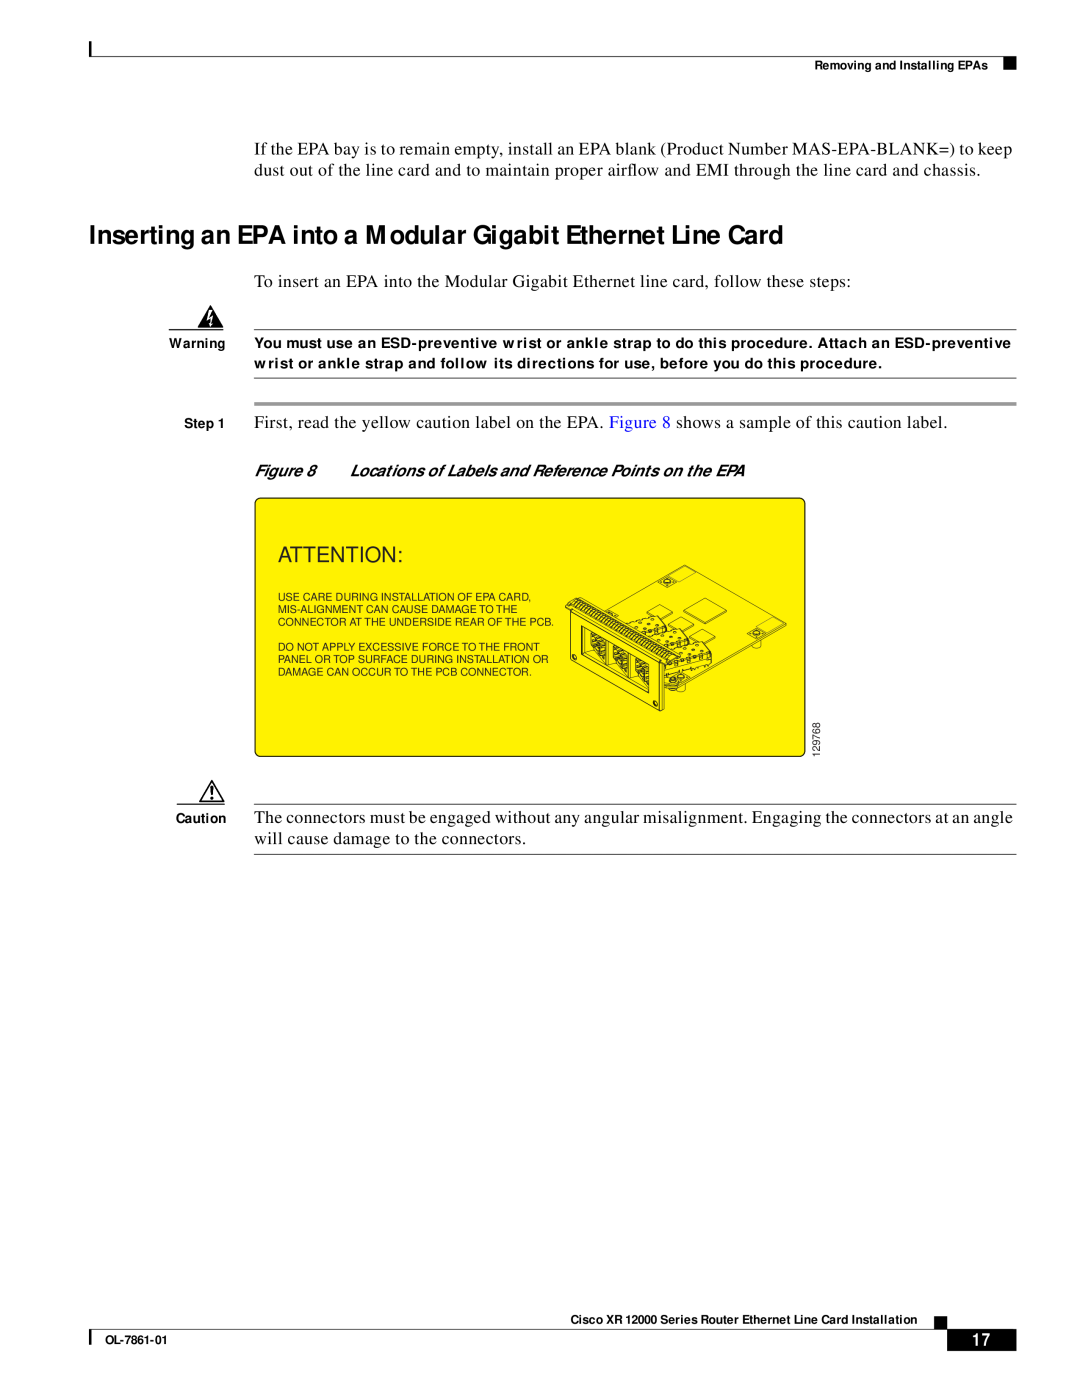 Cisco Systems OL-7861-01 manual Inserting an EPA into a Modular Gigabit Ethernet Line Card 